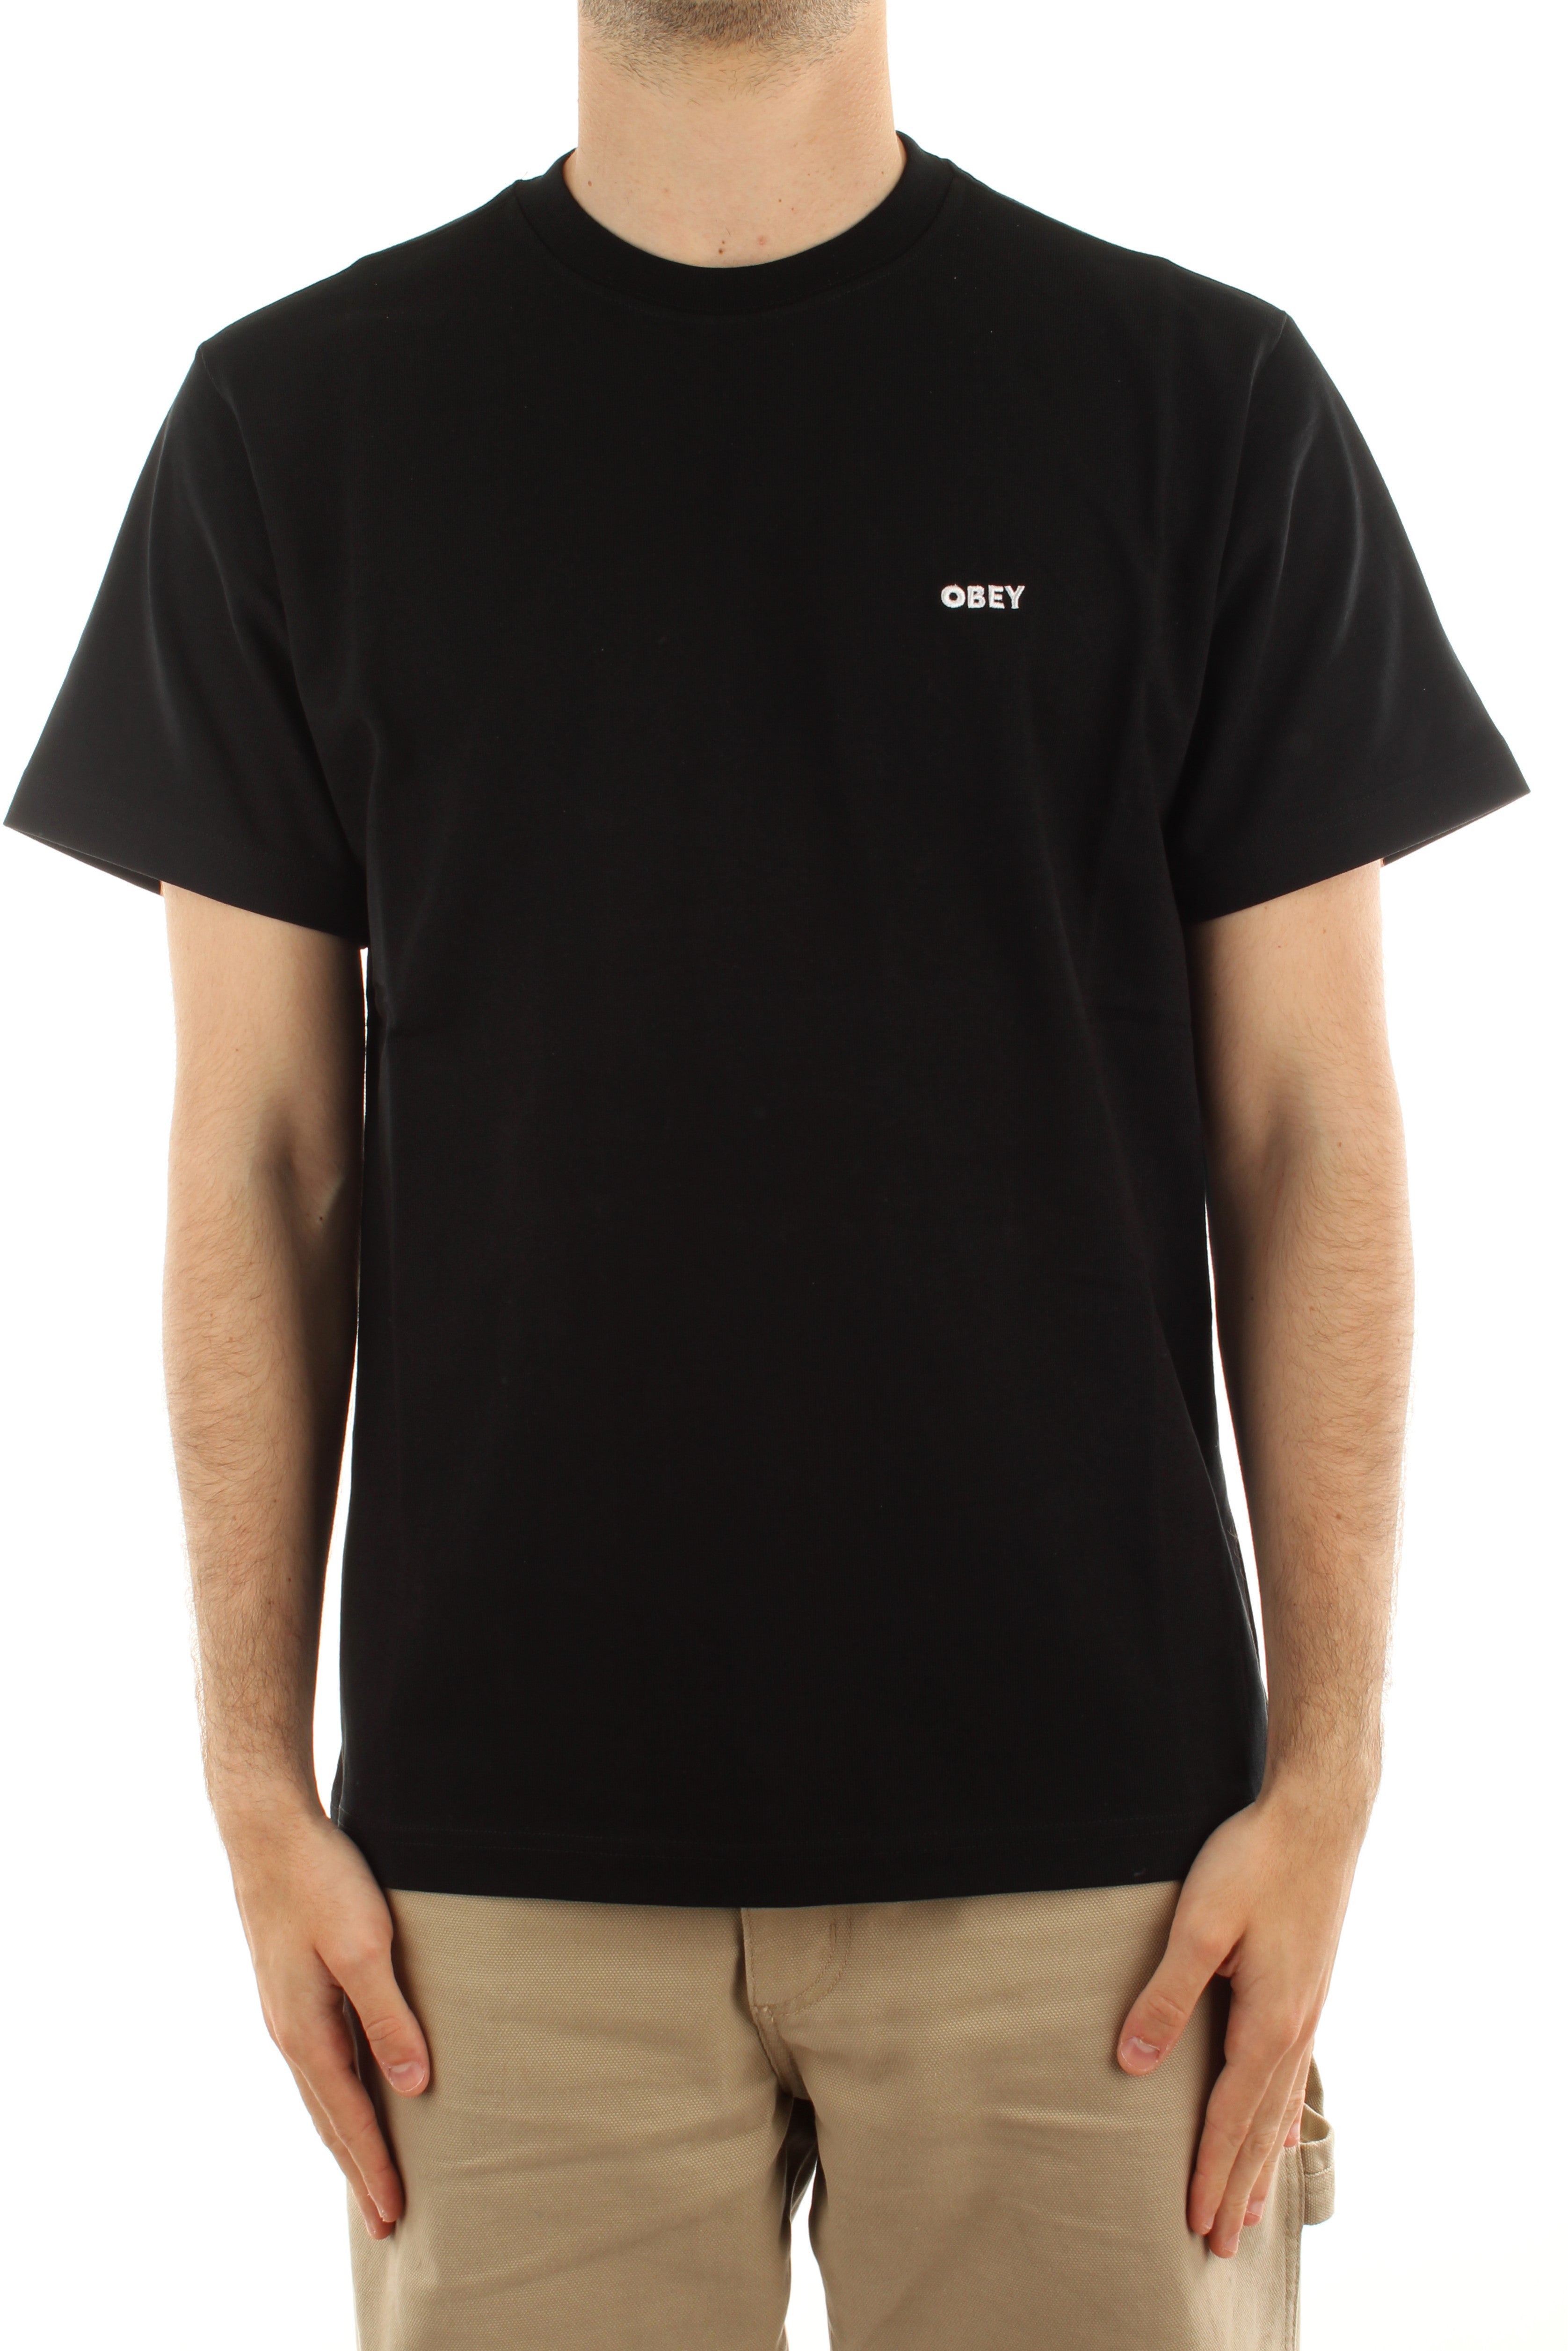 OBEY - Black T-shirt